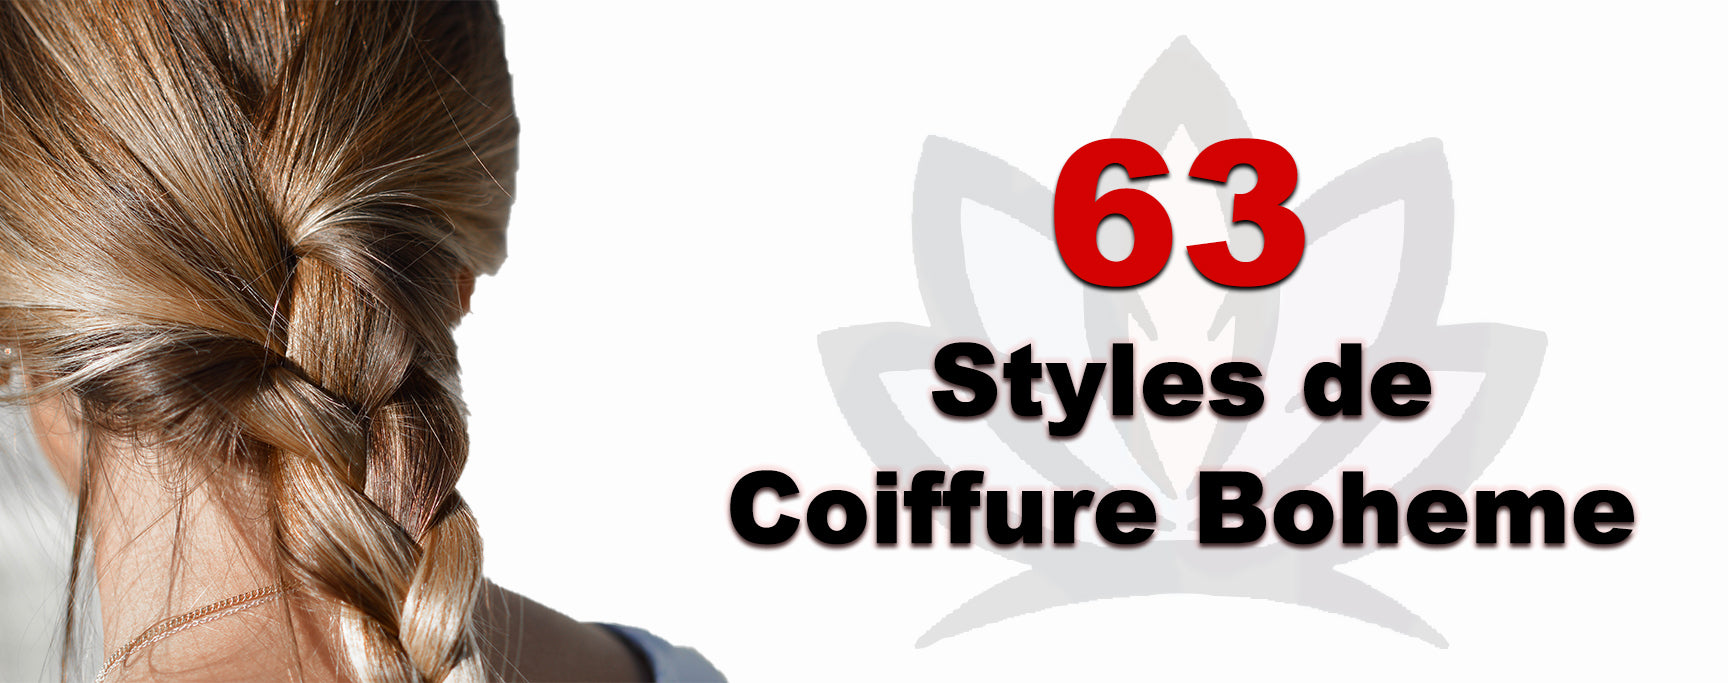 63 Styles de coiffure boheme